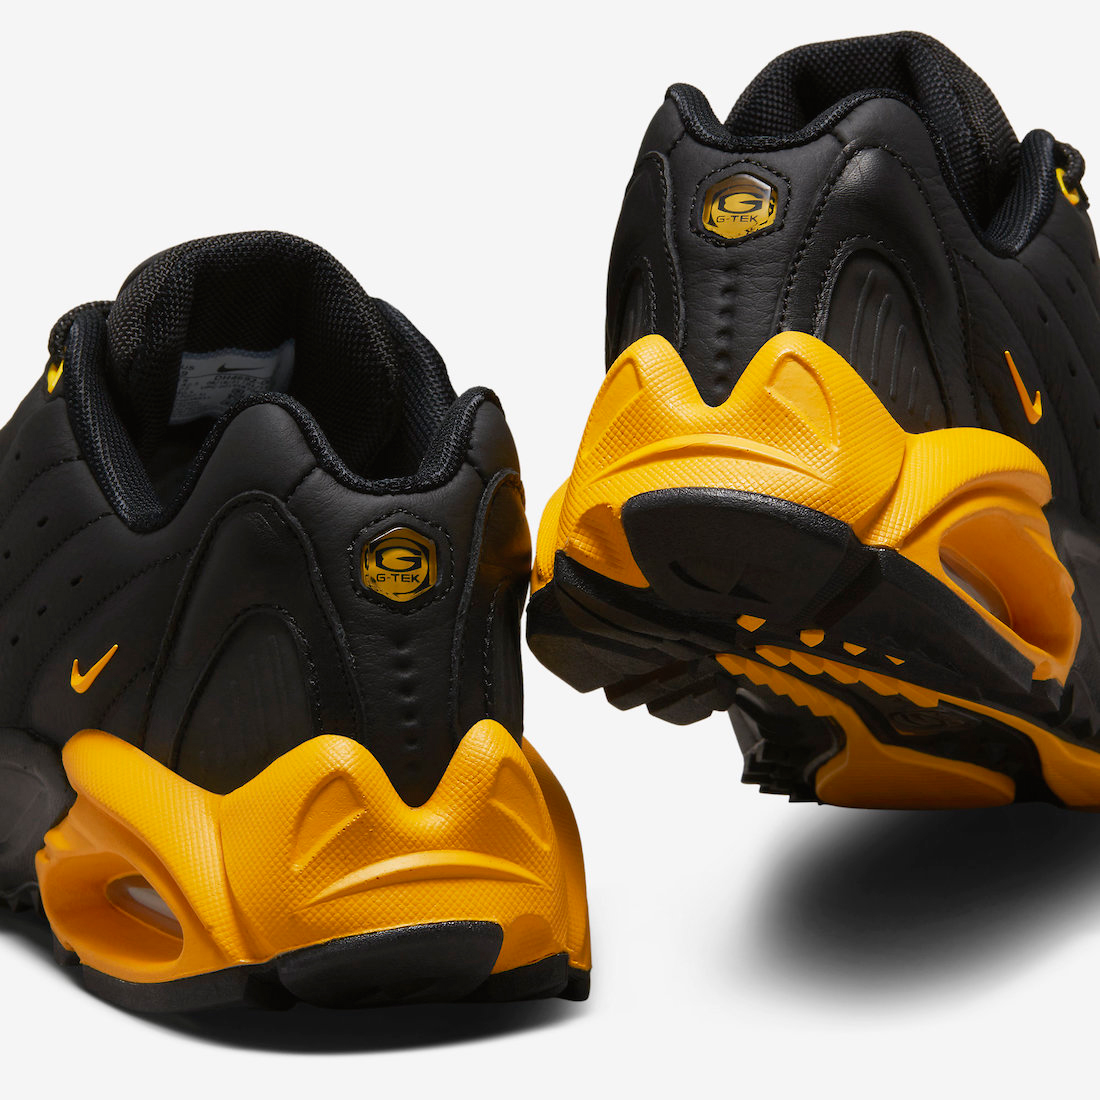 Drake-NOCTA-Nike-Hot-Step-Air-Terra-Black-University-Gold-DH4692-002-Release-Date-11